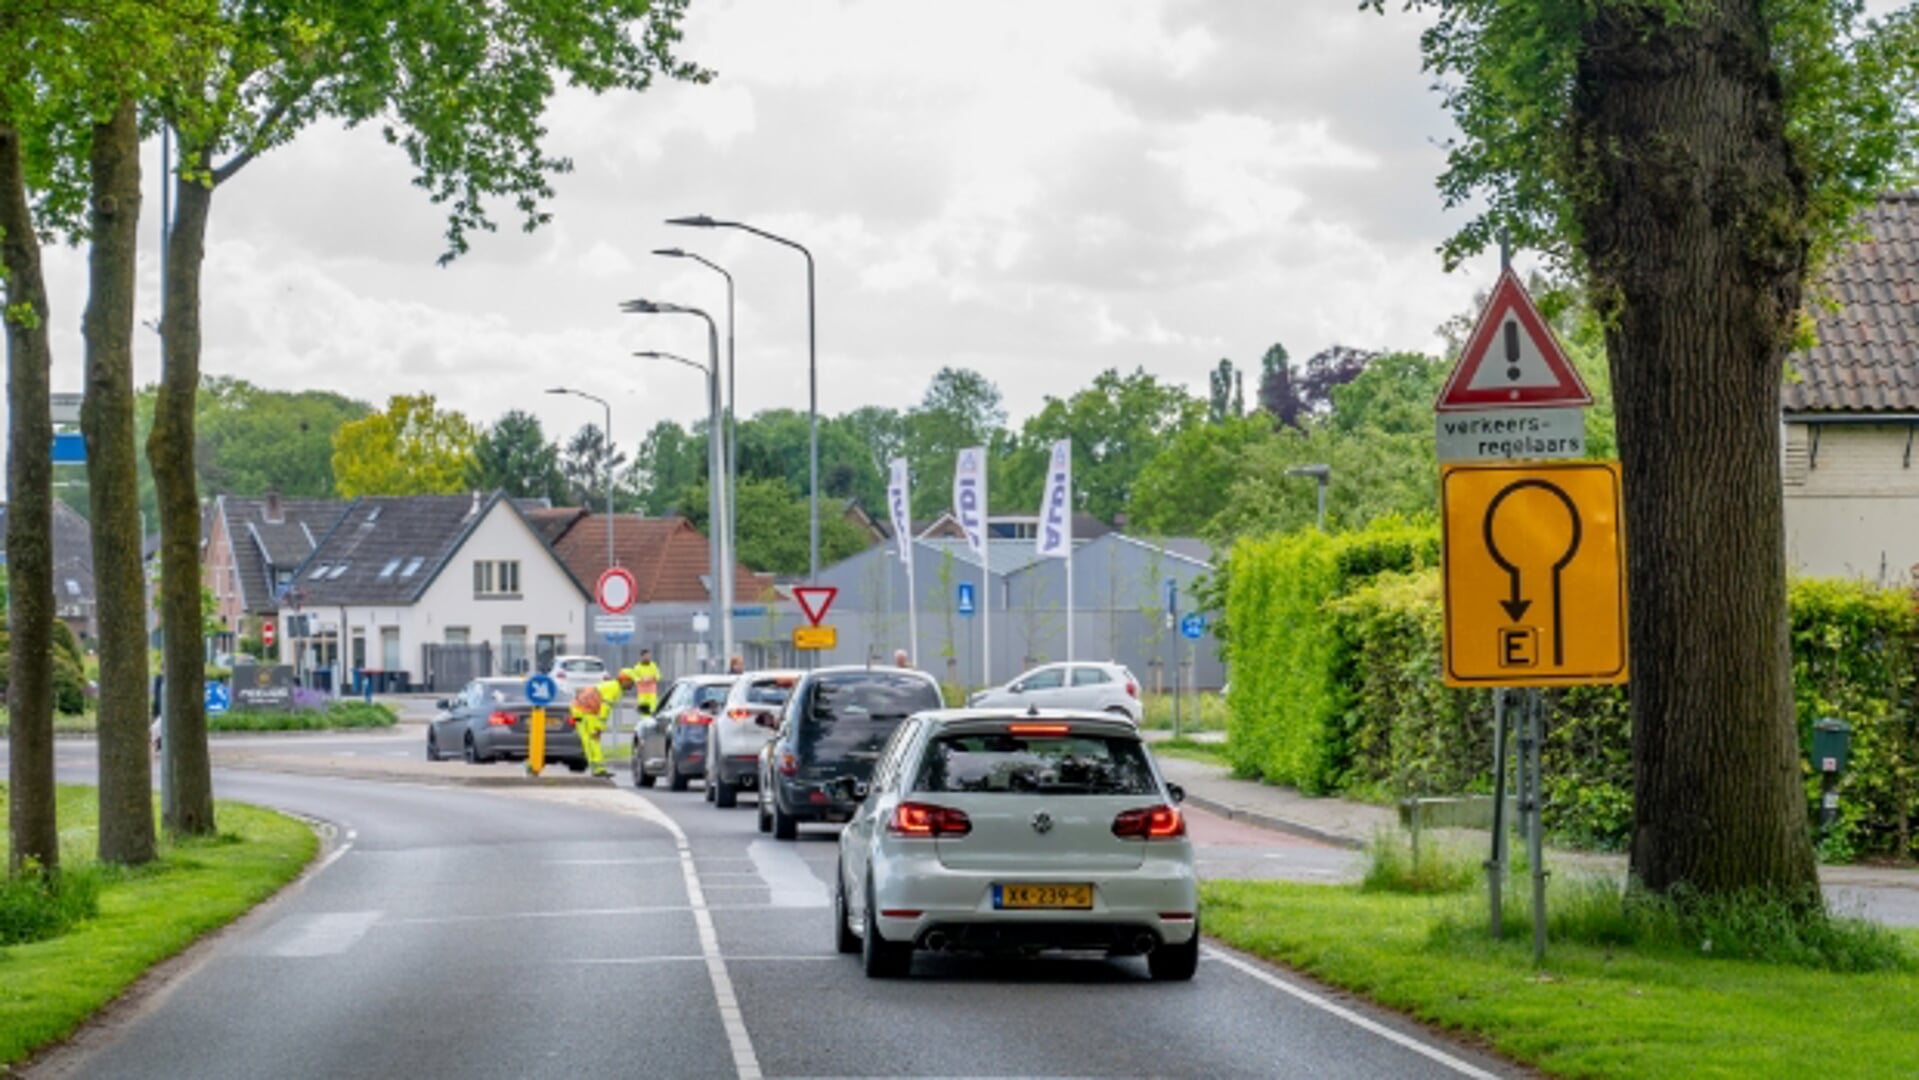 Controle bij de rotonde in Brummen. Foto: Rutger Jongejan.